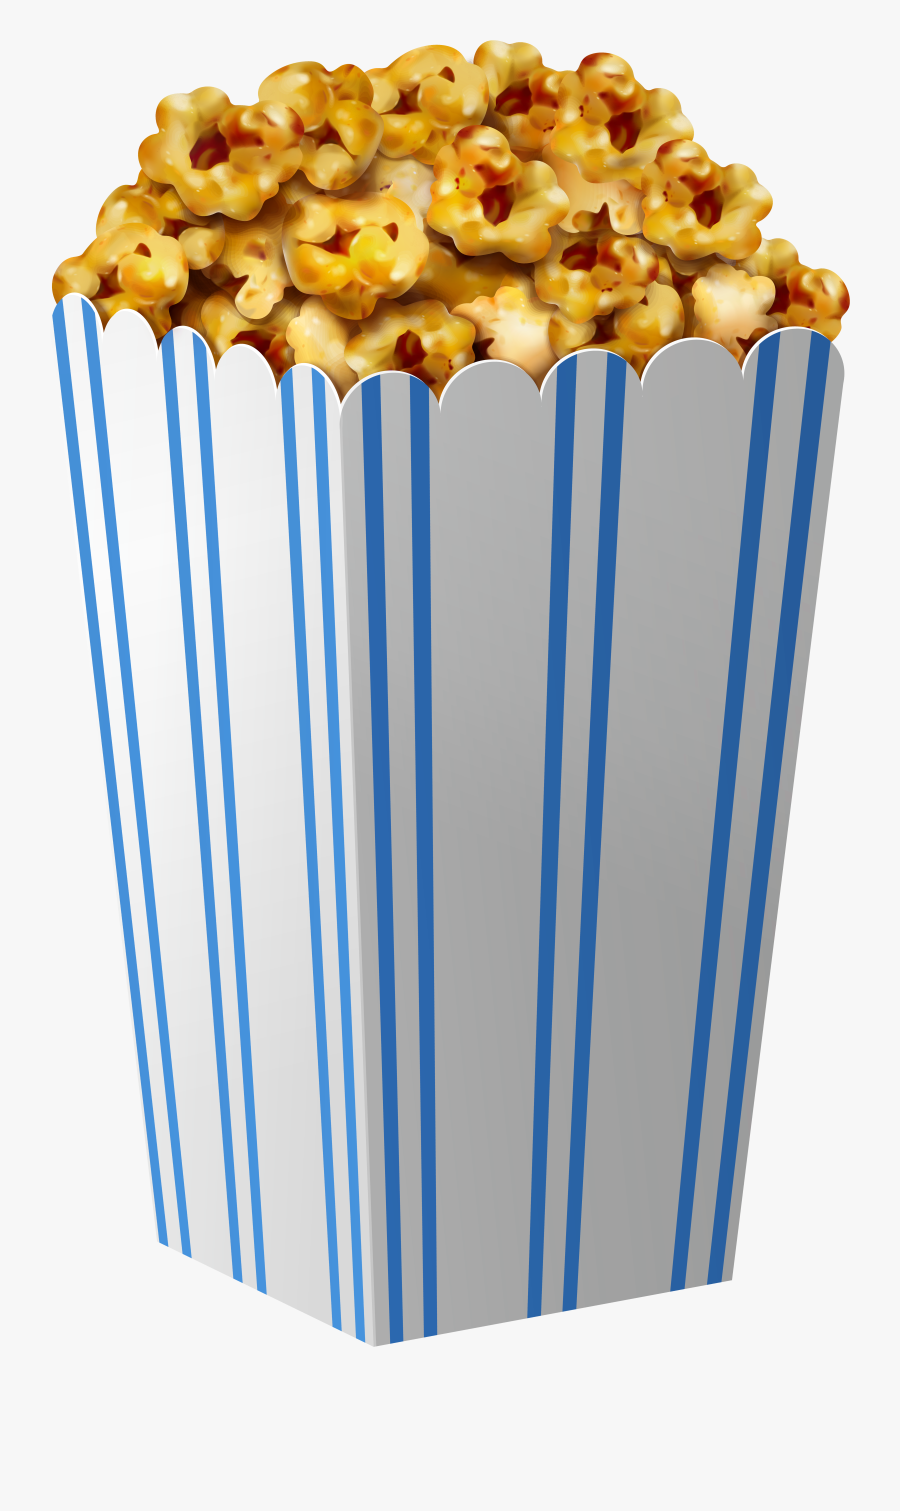 Popcorn Box Clipart - Popcorn Box Png, Transparent Clipart